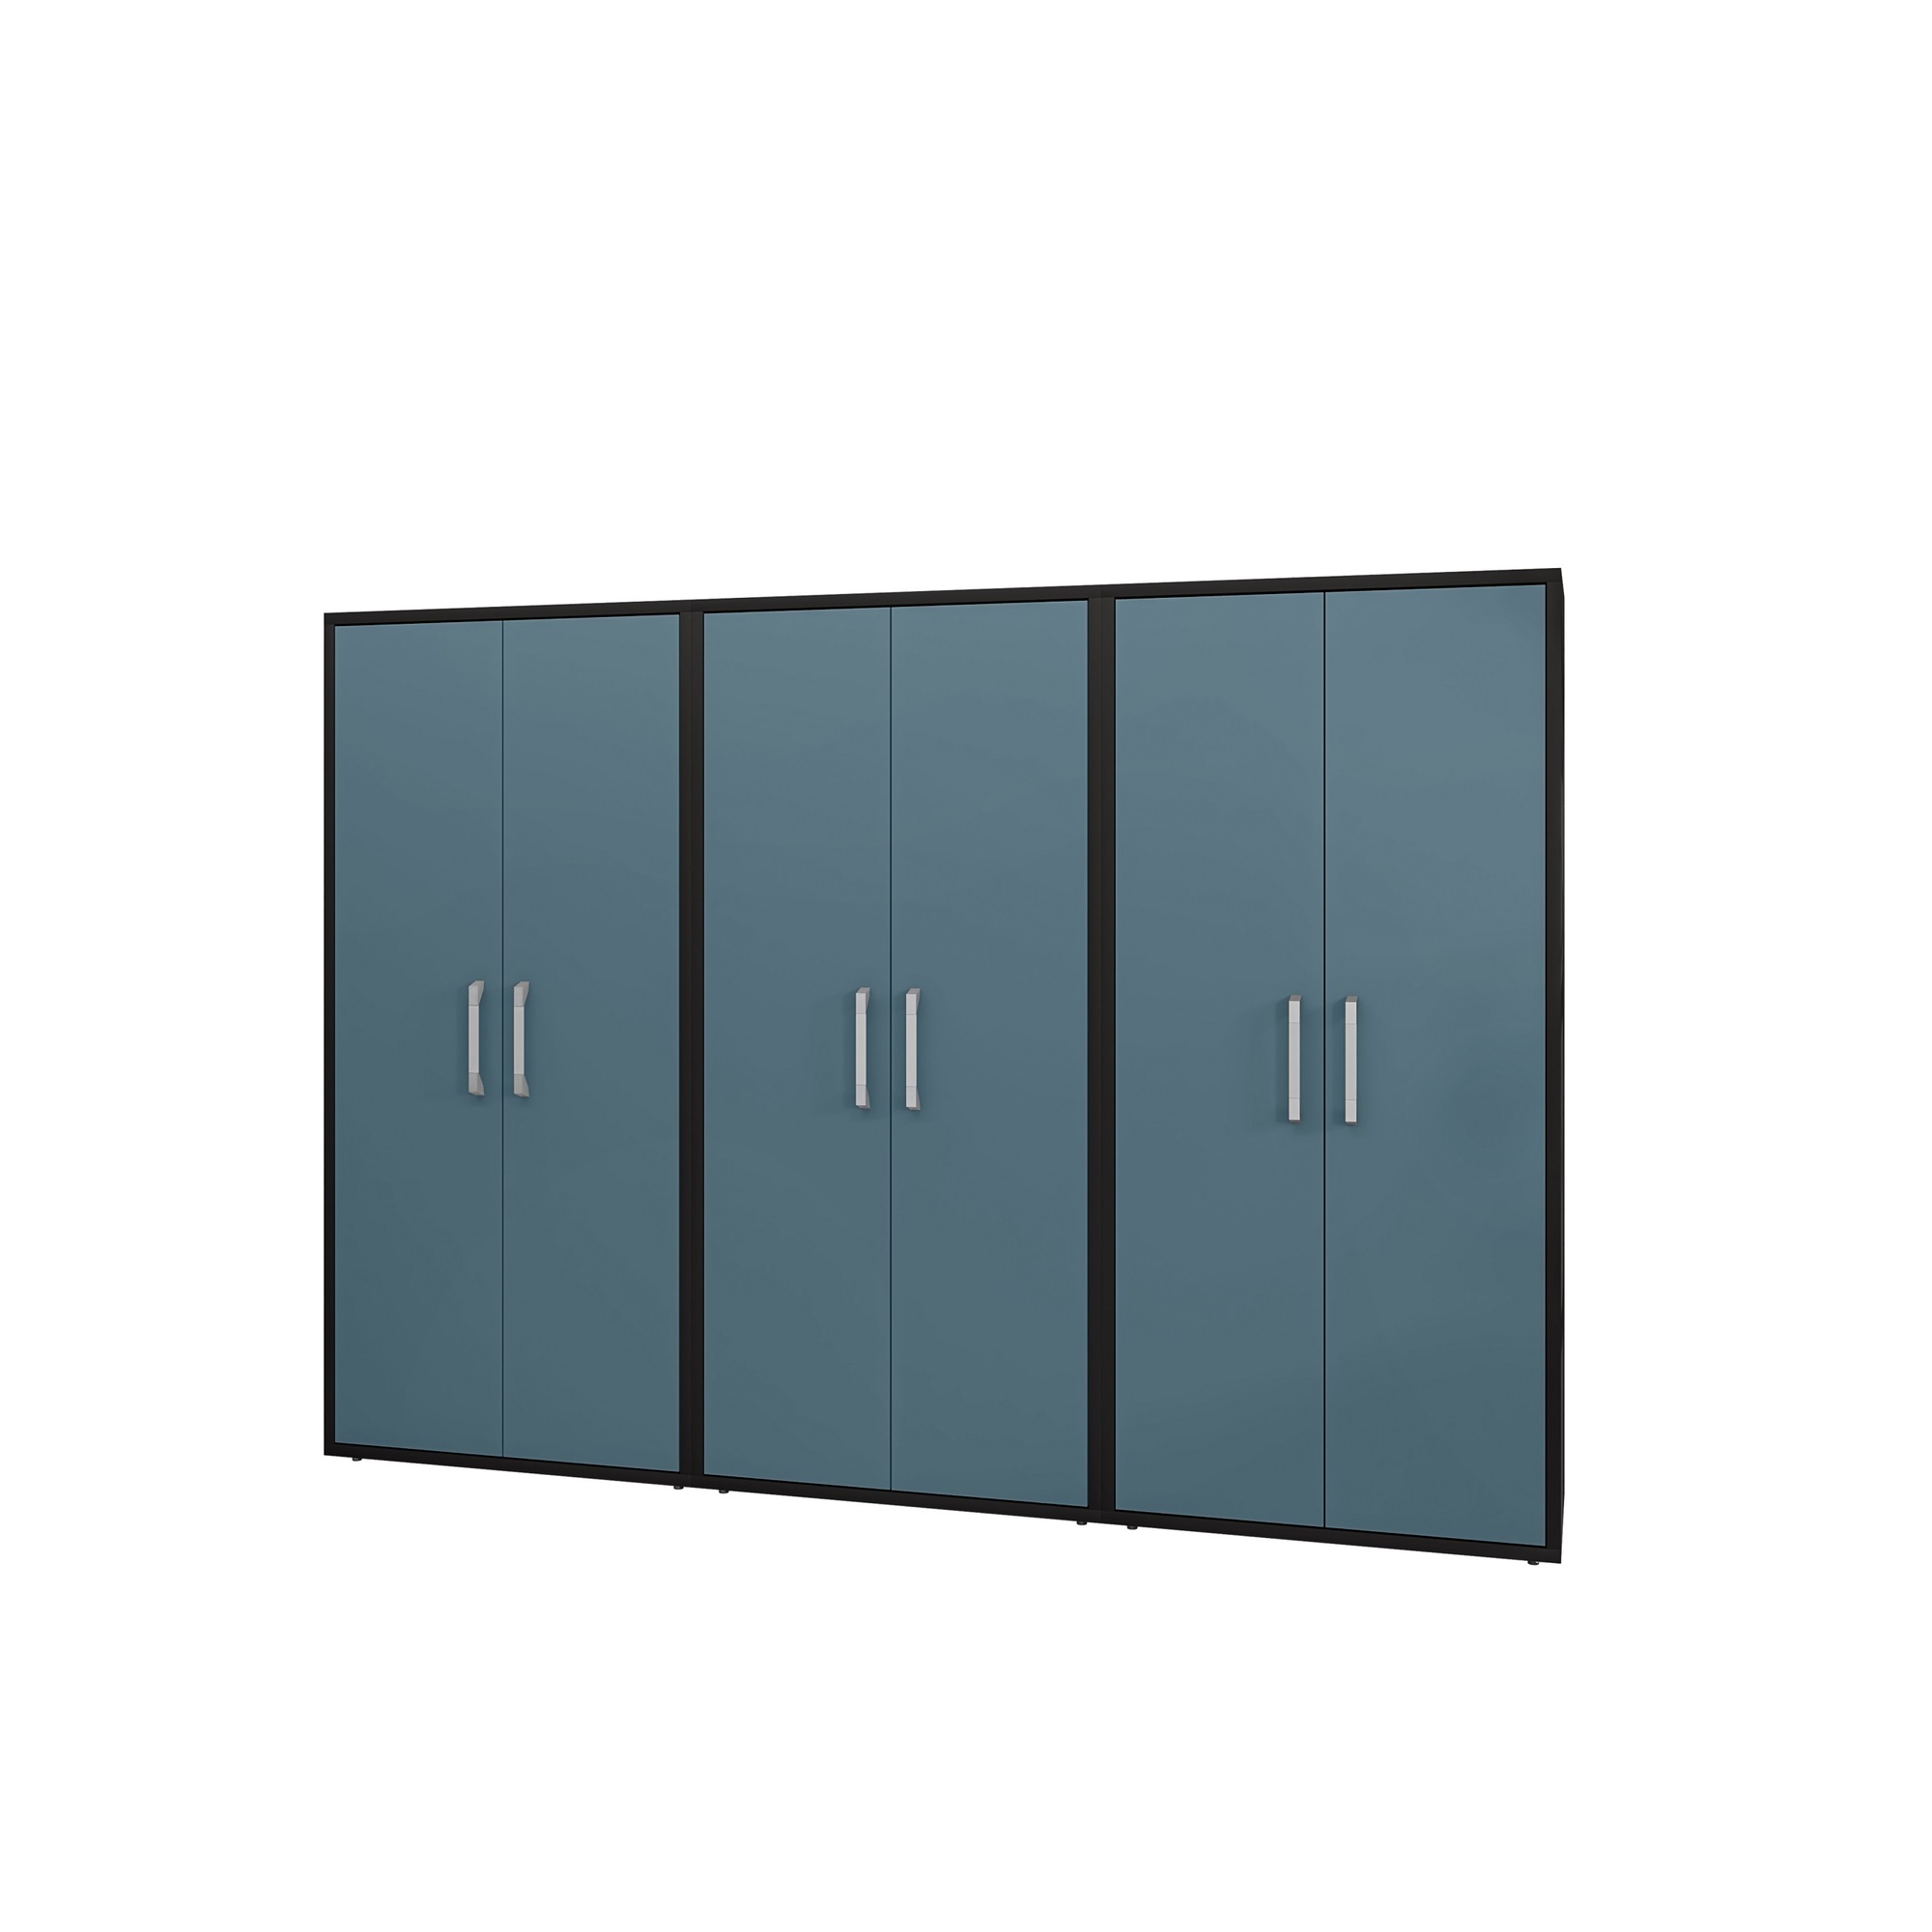 Manhattan Comfort, Eiffel Storage Cabinet in Black and Aqua, Set of 3 Height 73.43 in, Width 106.29 in, Color Blue, Model 3-250BMC